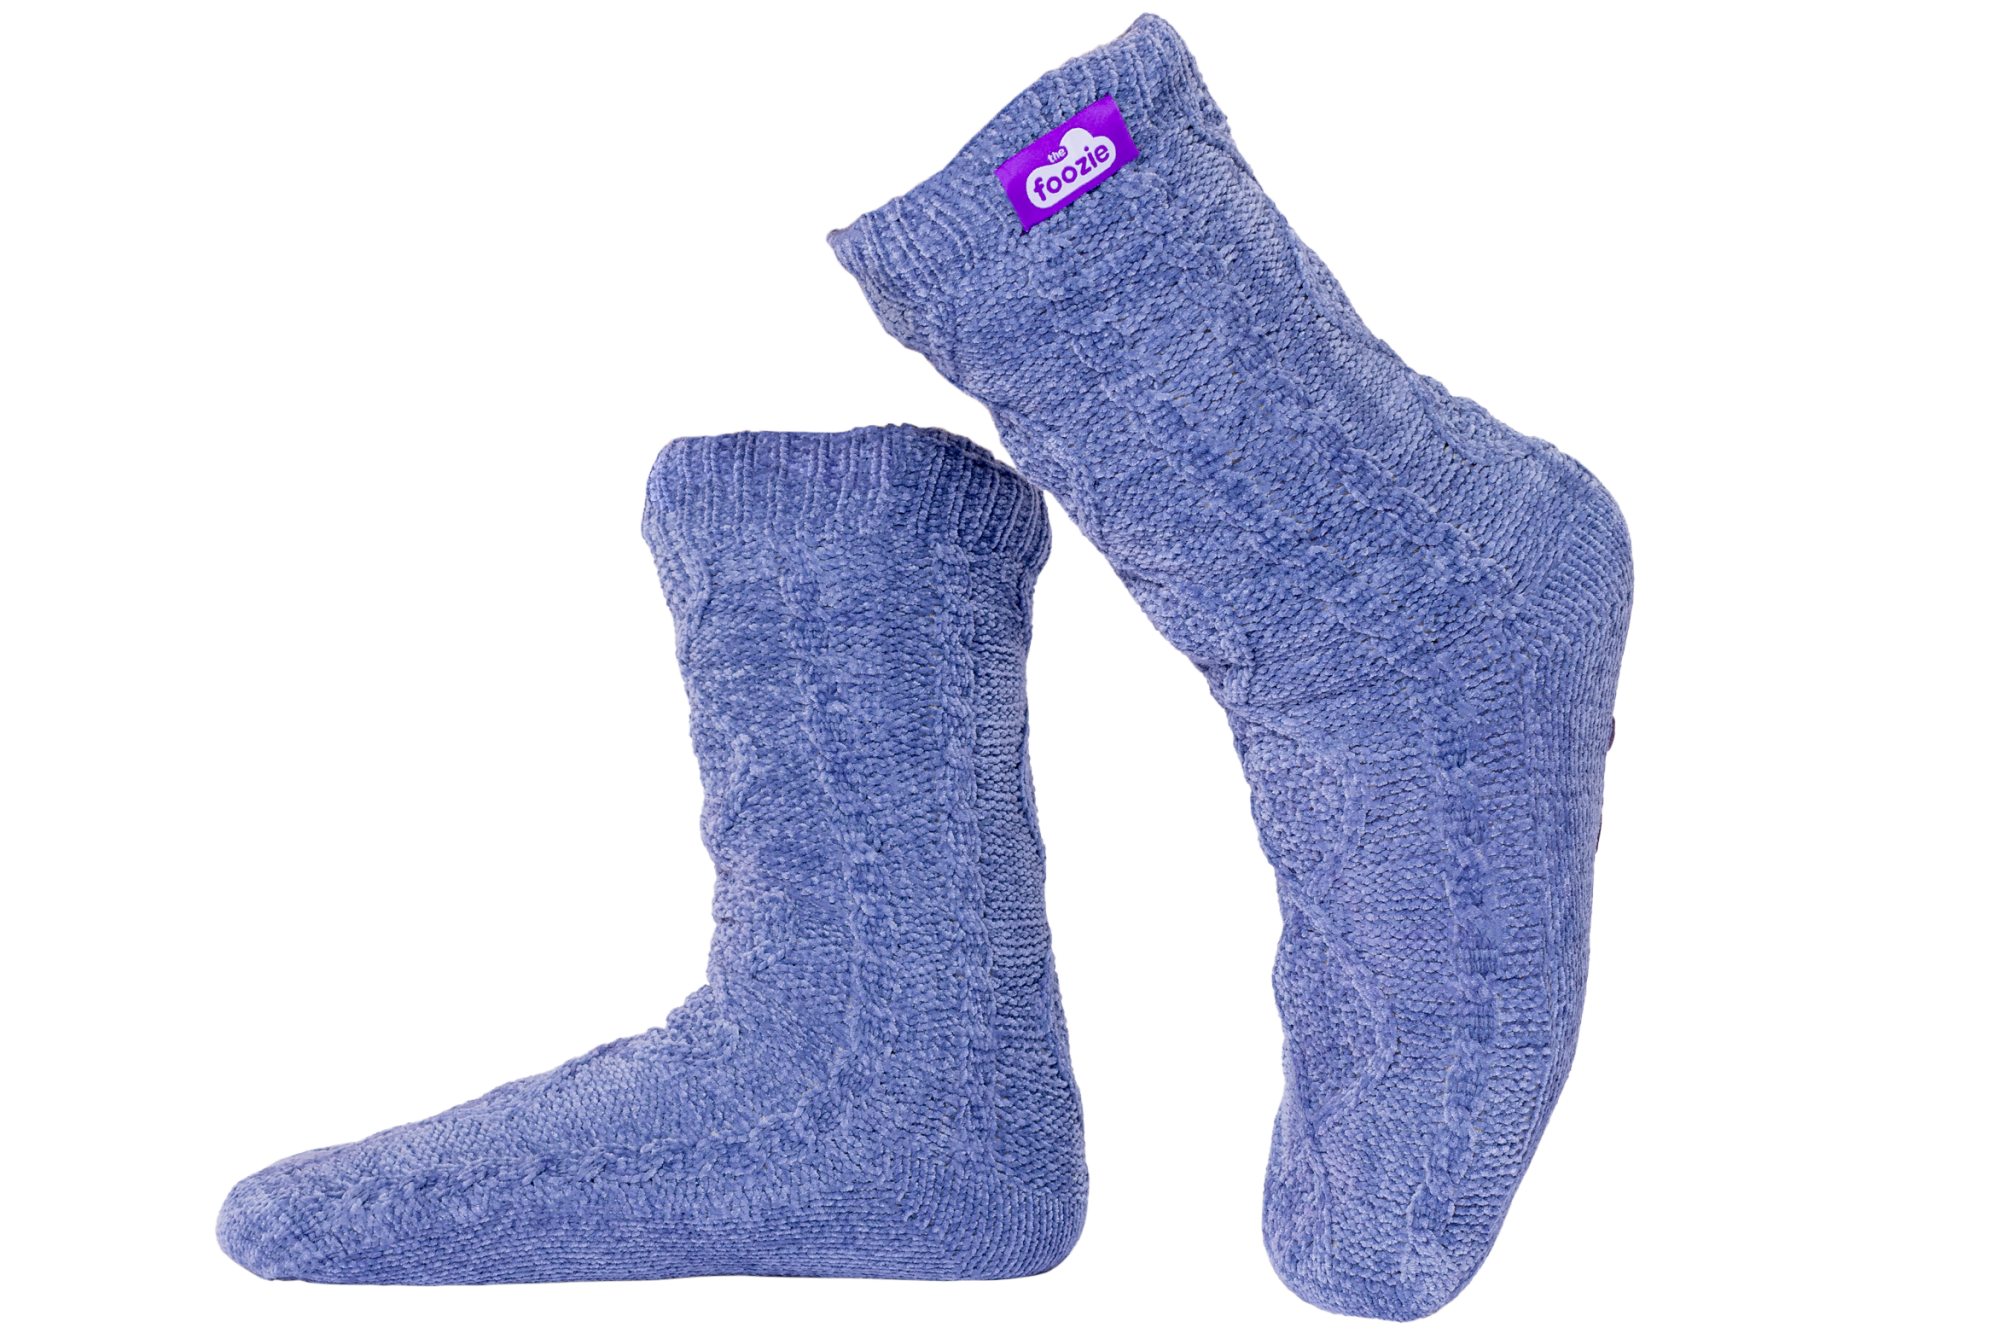 A blue pair of Foozie Move slipper socks